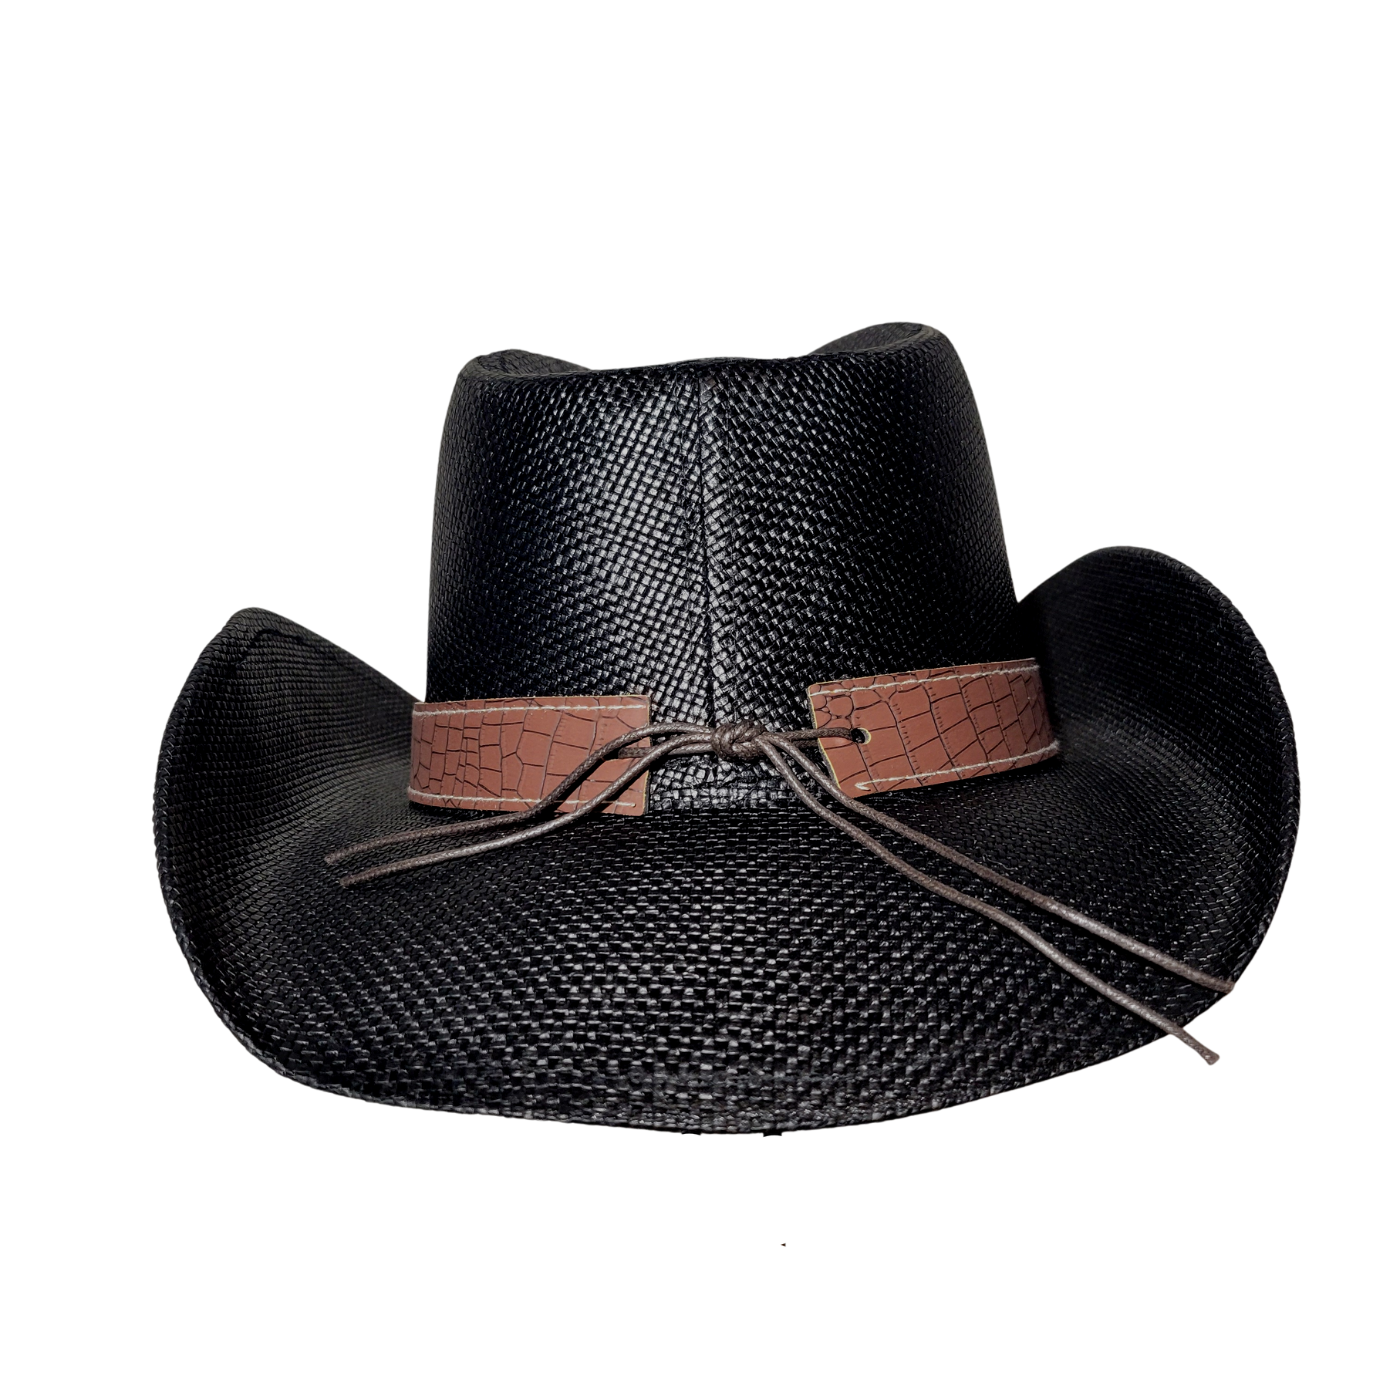 Black Leather Cowboy Hat